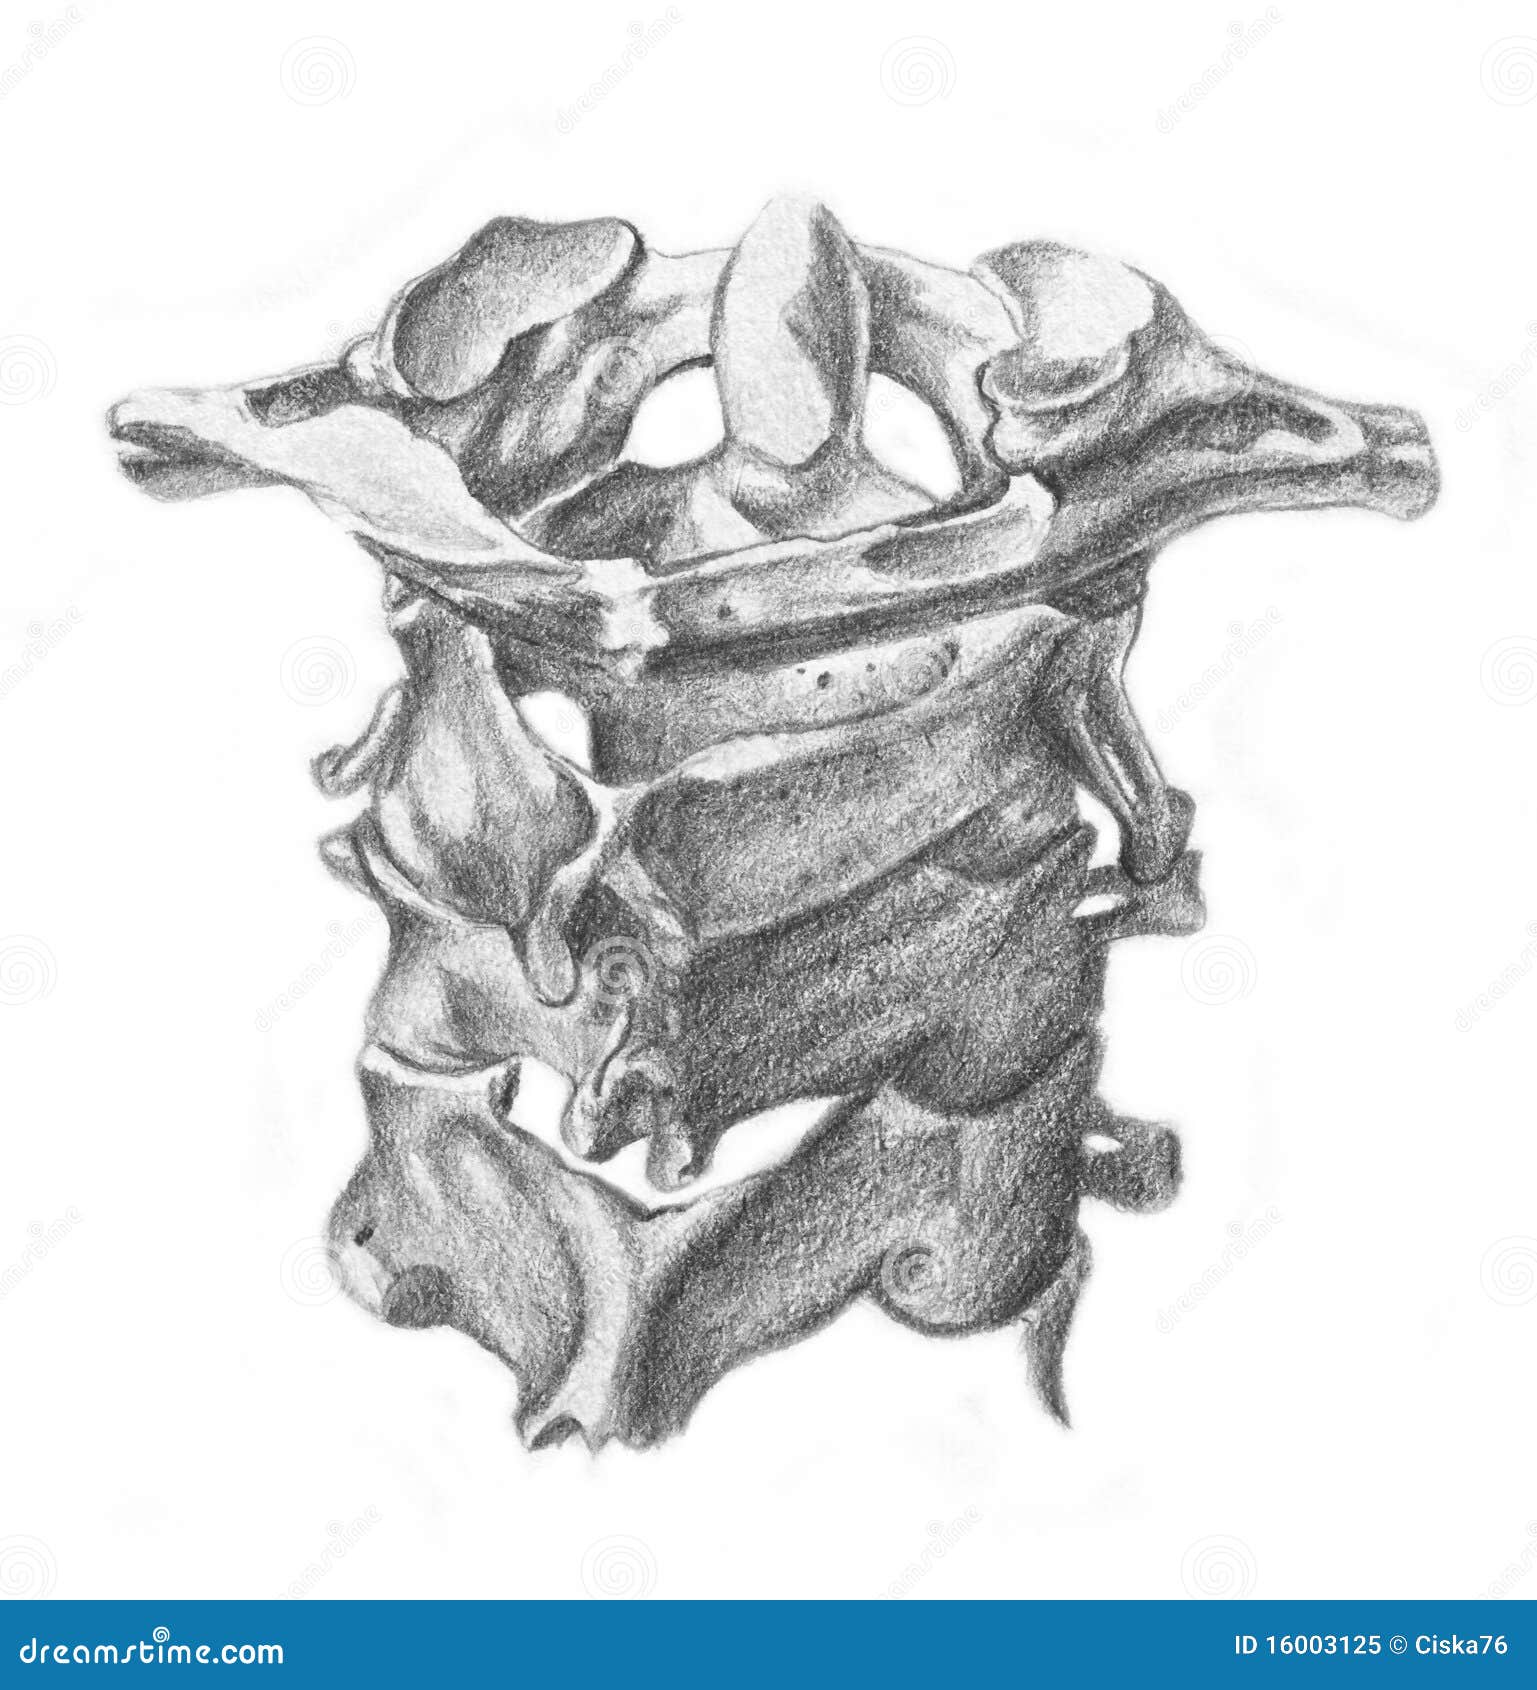 Cervical Vertebrae Vector Illustration Scheme With Skull And C1 Atlas